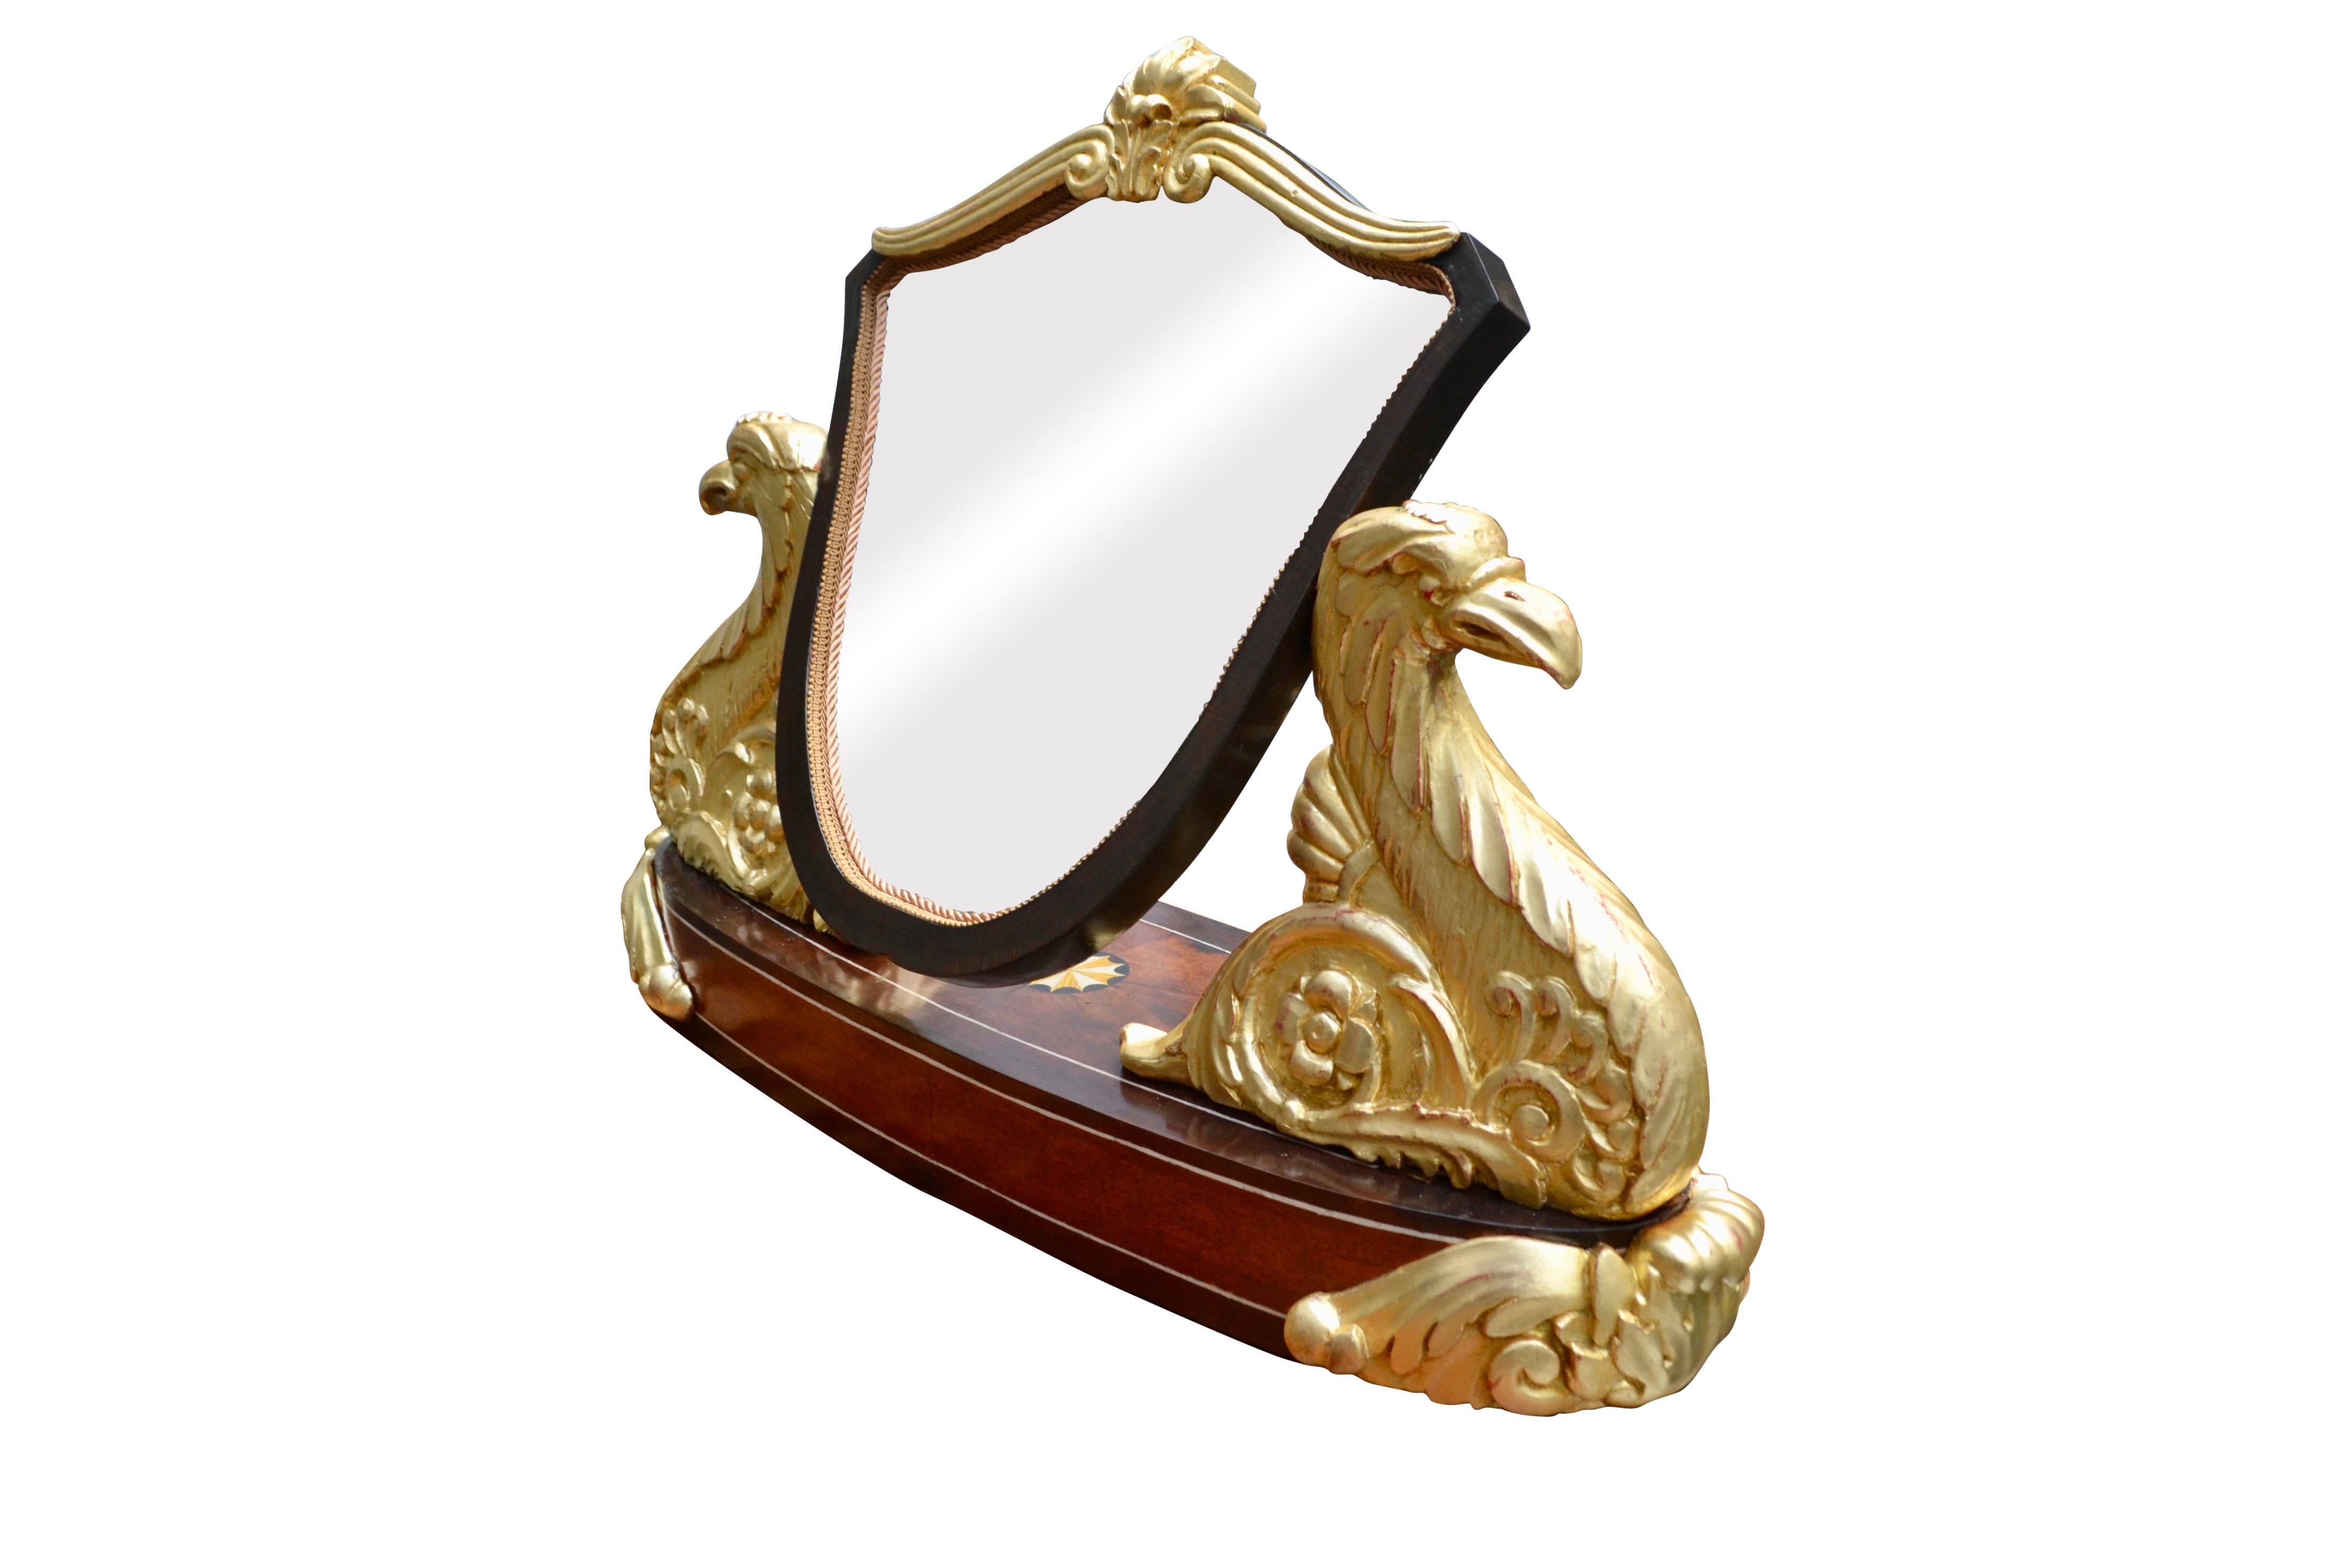 Period Austrian Biedermeier Vanity Table Mirror In Good Condition For Sale In Vancouver, British Columbia